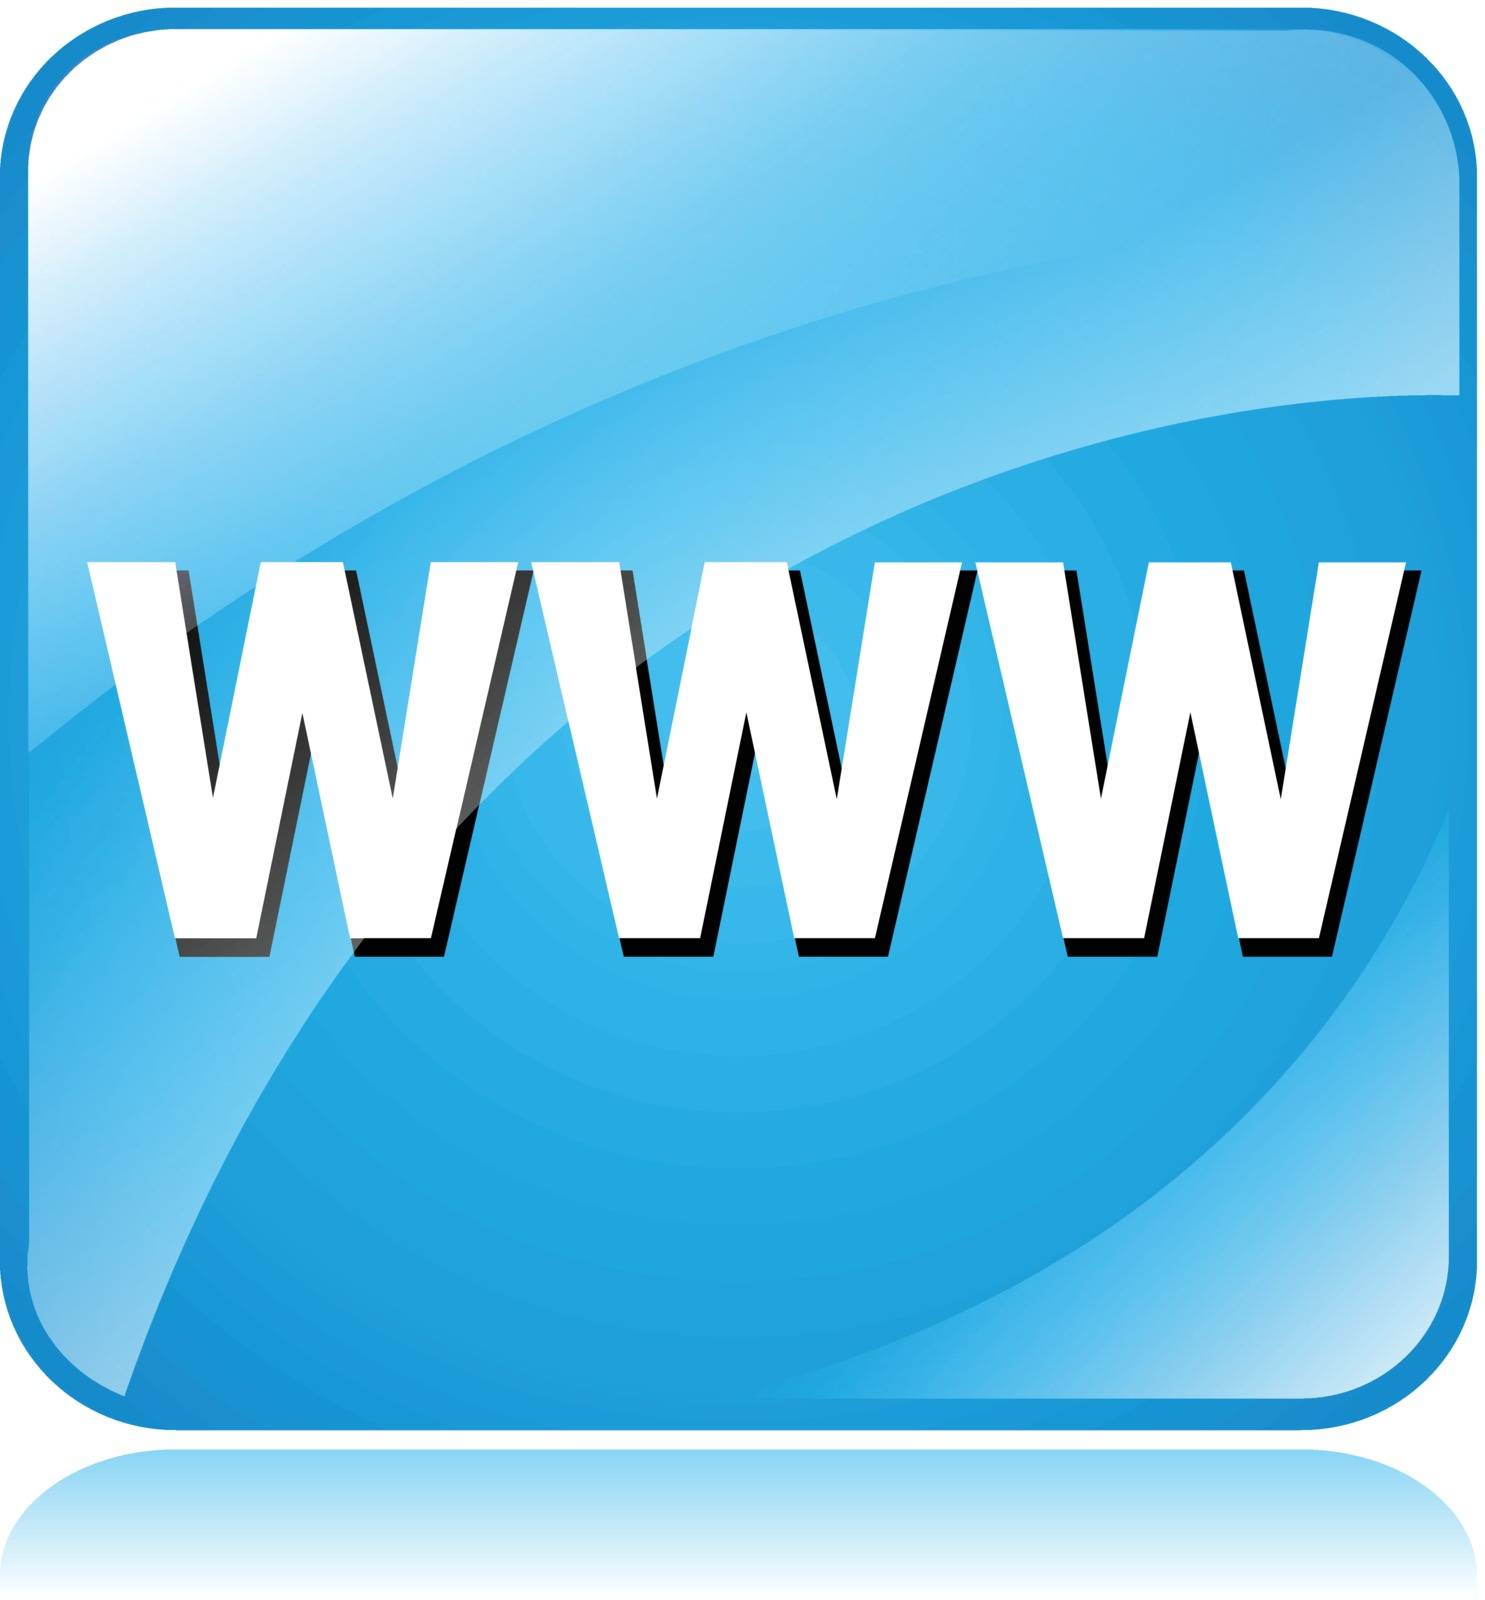 Illustration of blue square design icon for website